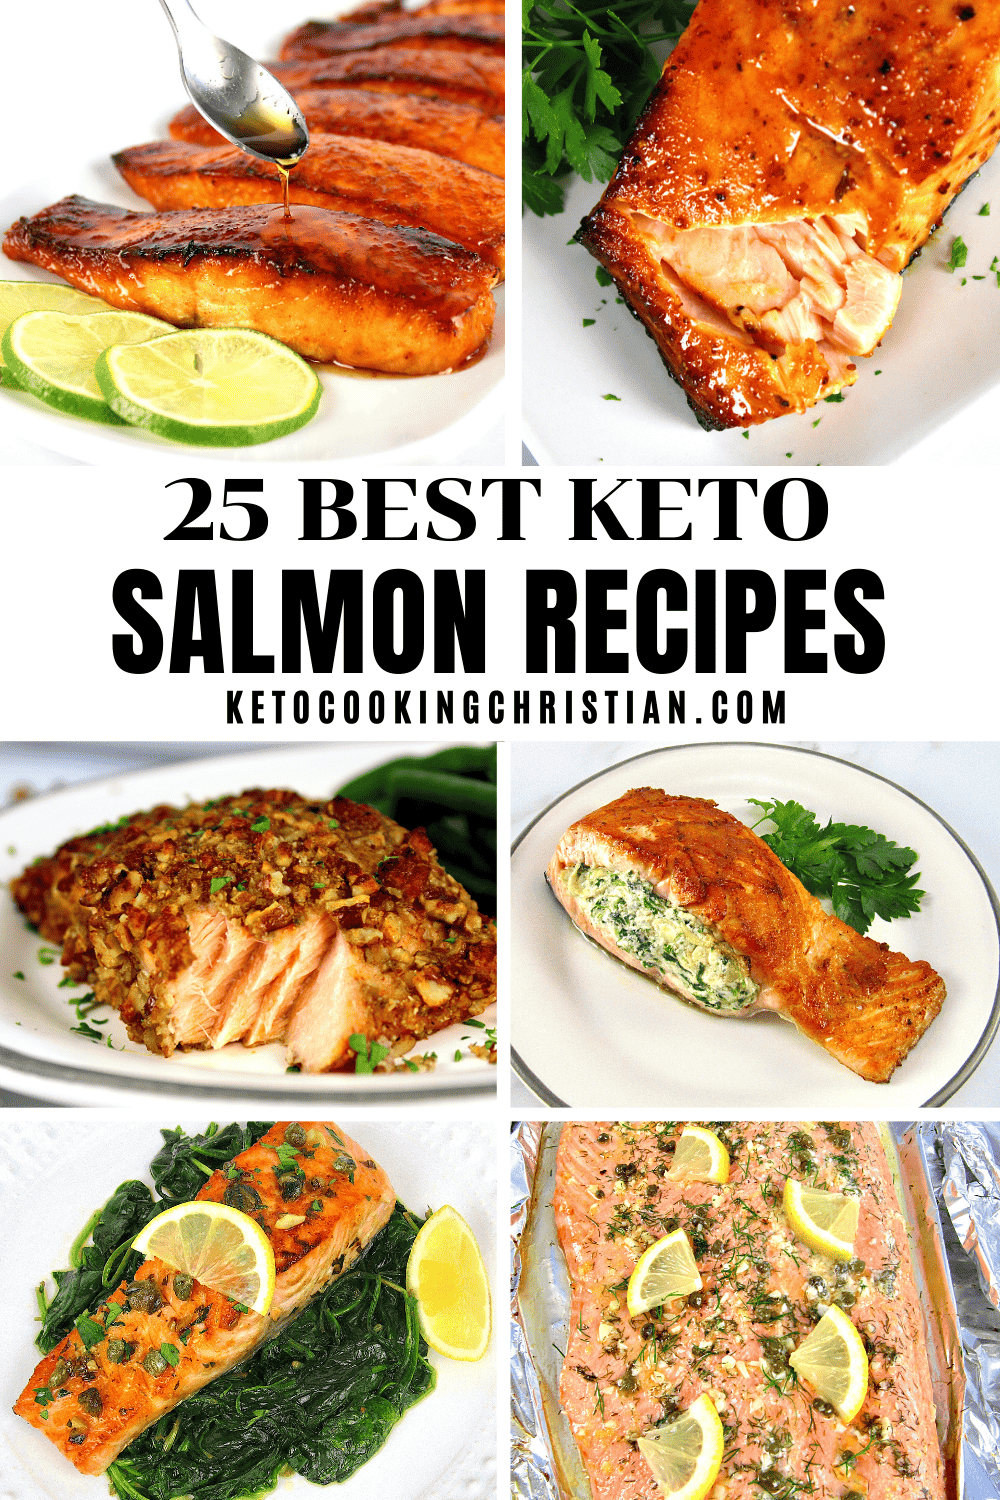 25 Best Keto Salmon Recipes pin